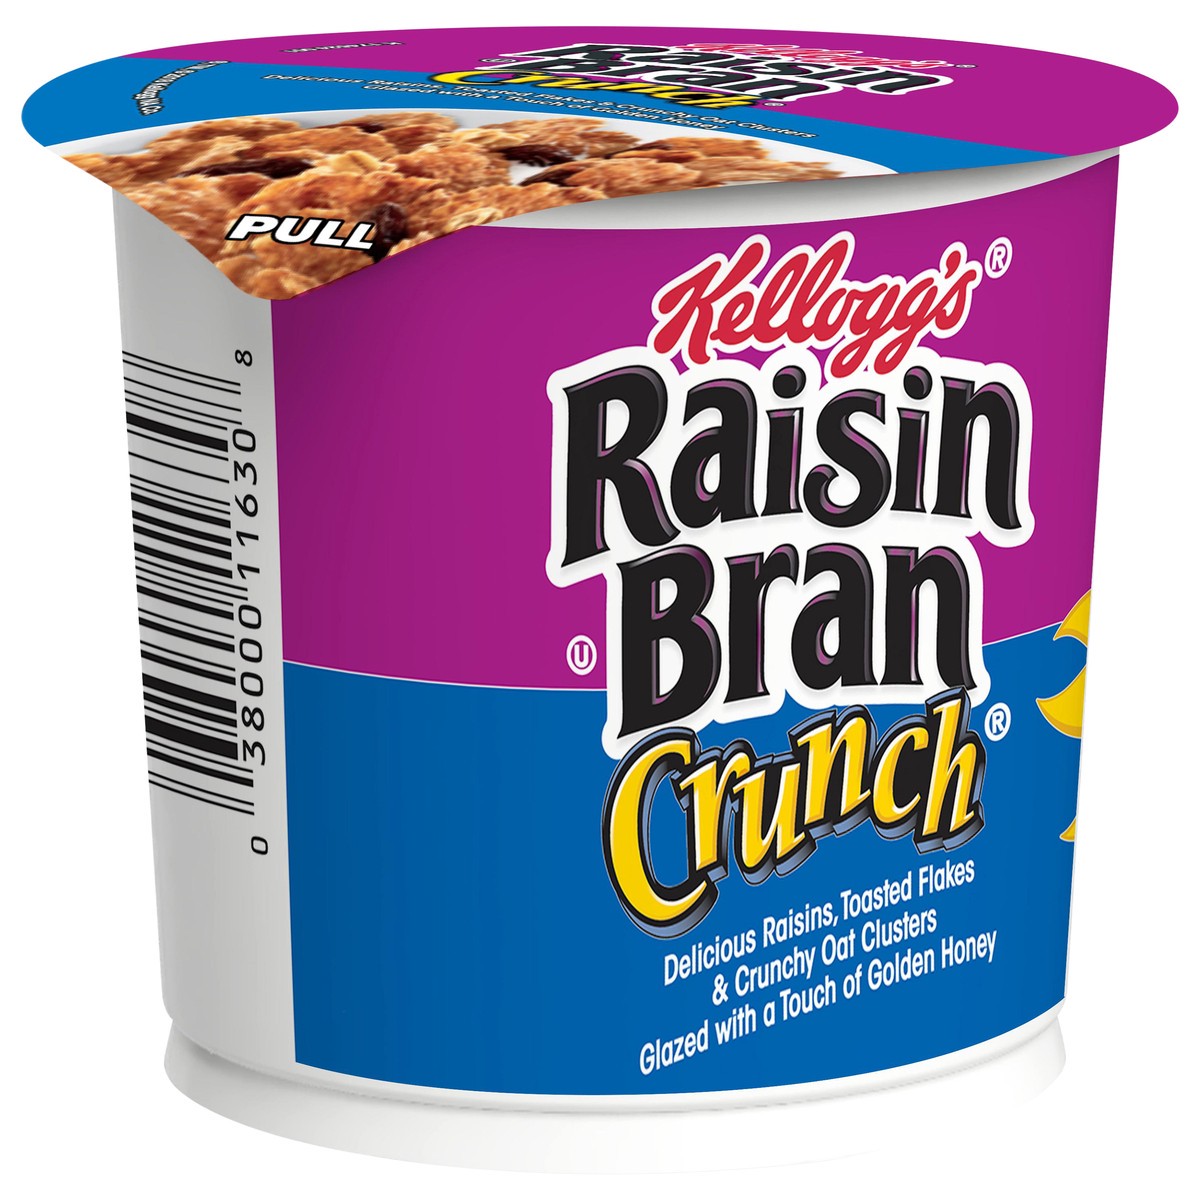 slide 8 of 8, Raisin Bran Kellogg's Raisin Bran Crunch Breakfast Cereal Cups, Family Breakfast, Fiber Cereal, Original, 2.8oz Cup, 1 Cup, 2.8 oz